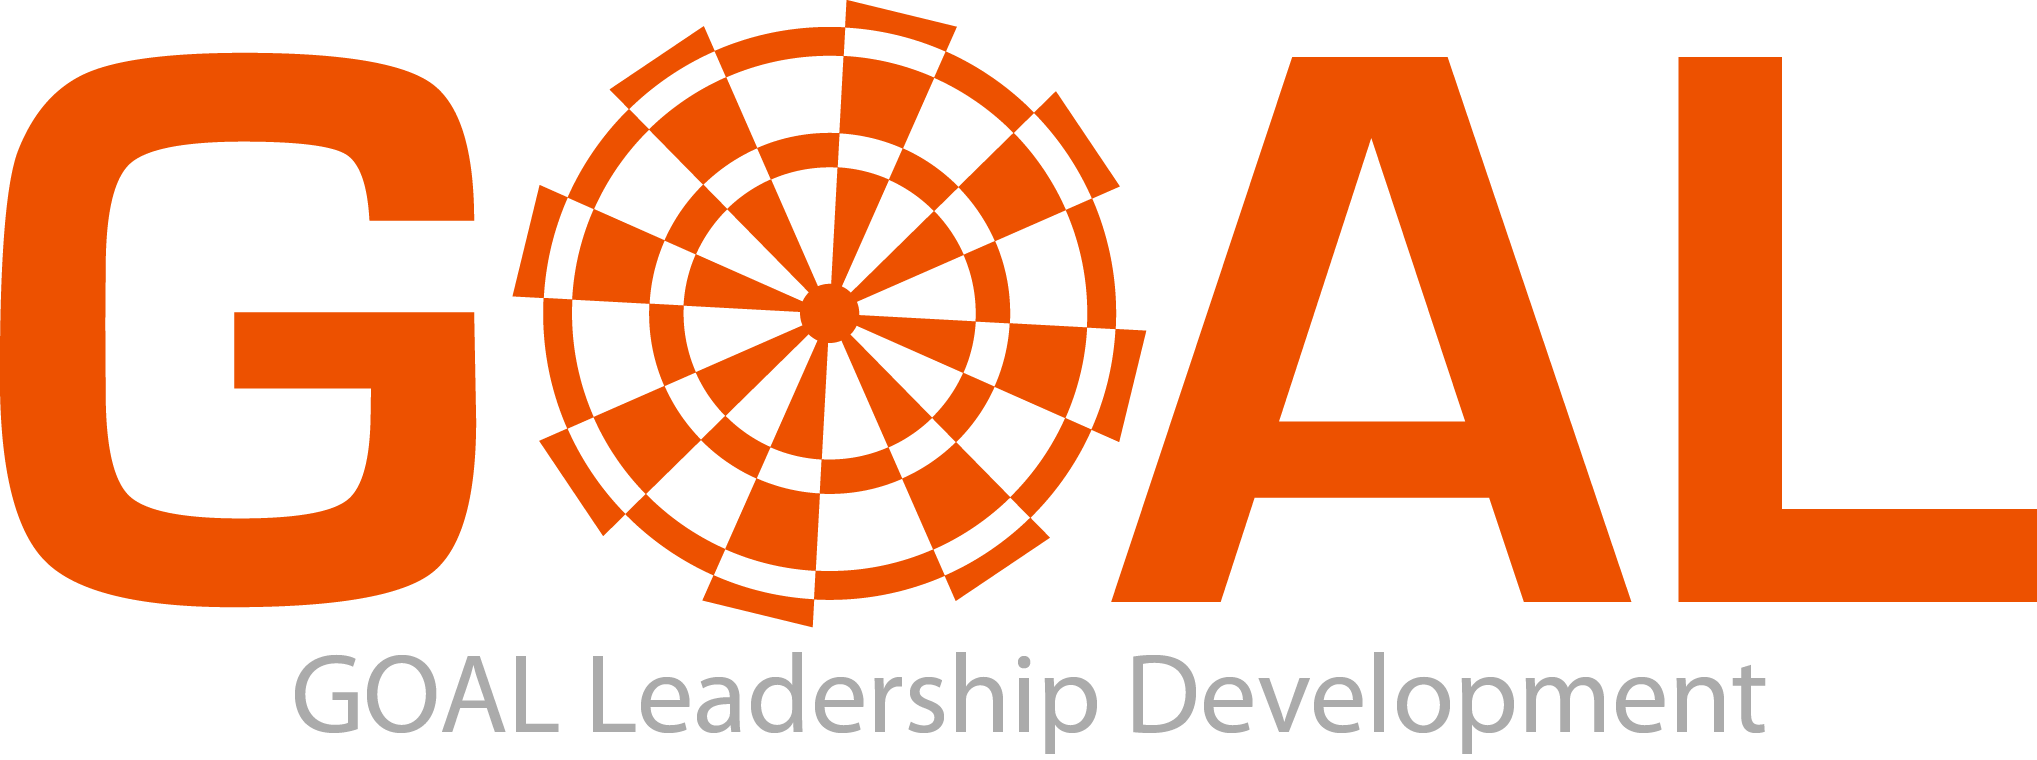 leader clipart leadership development